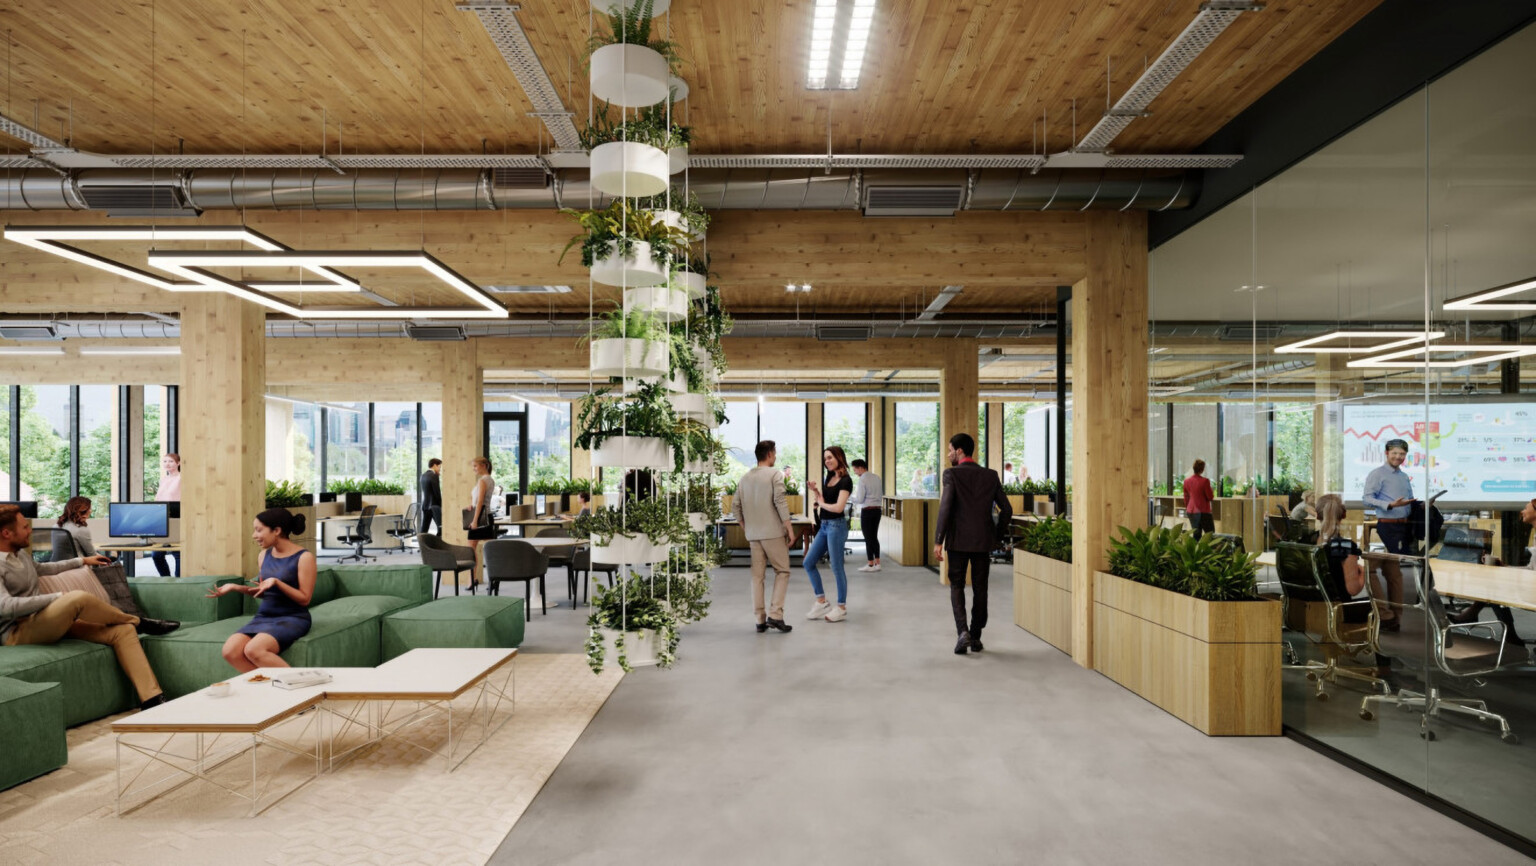 Mass timber office interior, geometric accent pendant lights, biophilia greenery, exposed warm wood, large windows